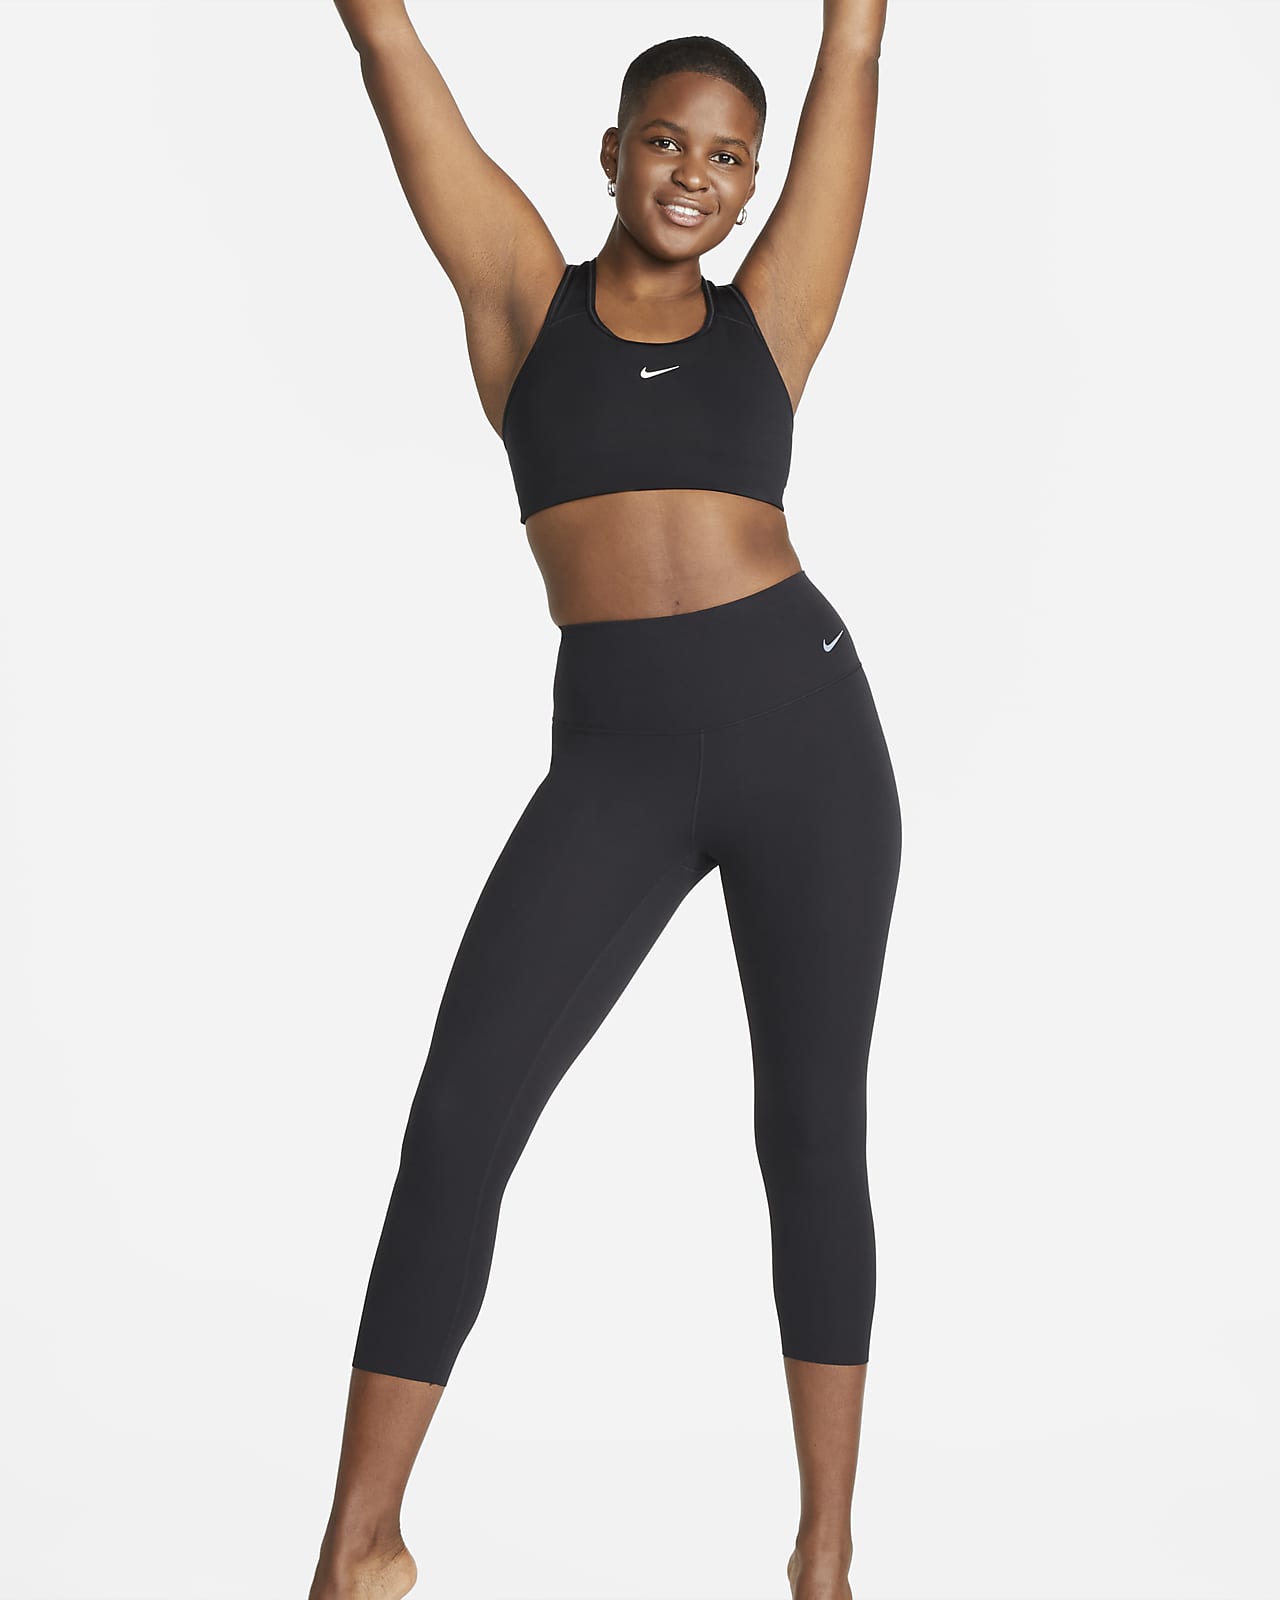 Leggings a lunghezza ridotta a vita alta e sostegno leggero Nike Zenvy – Donna